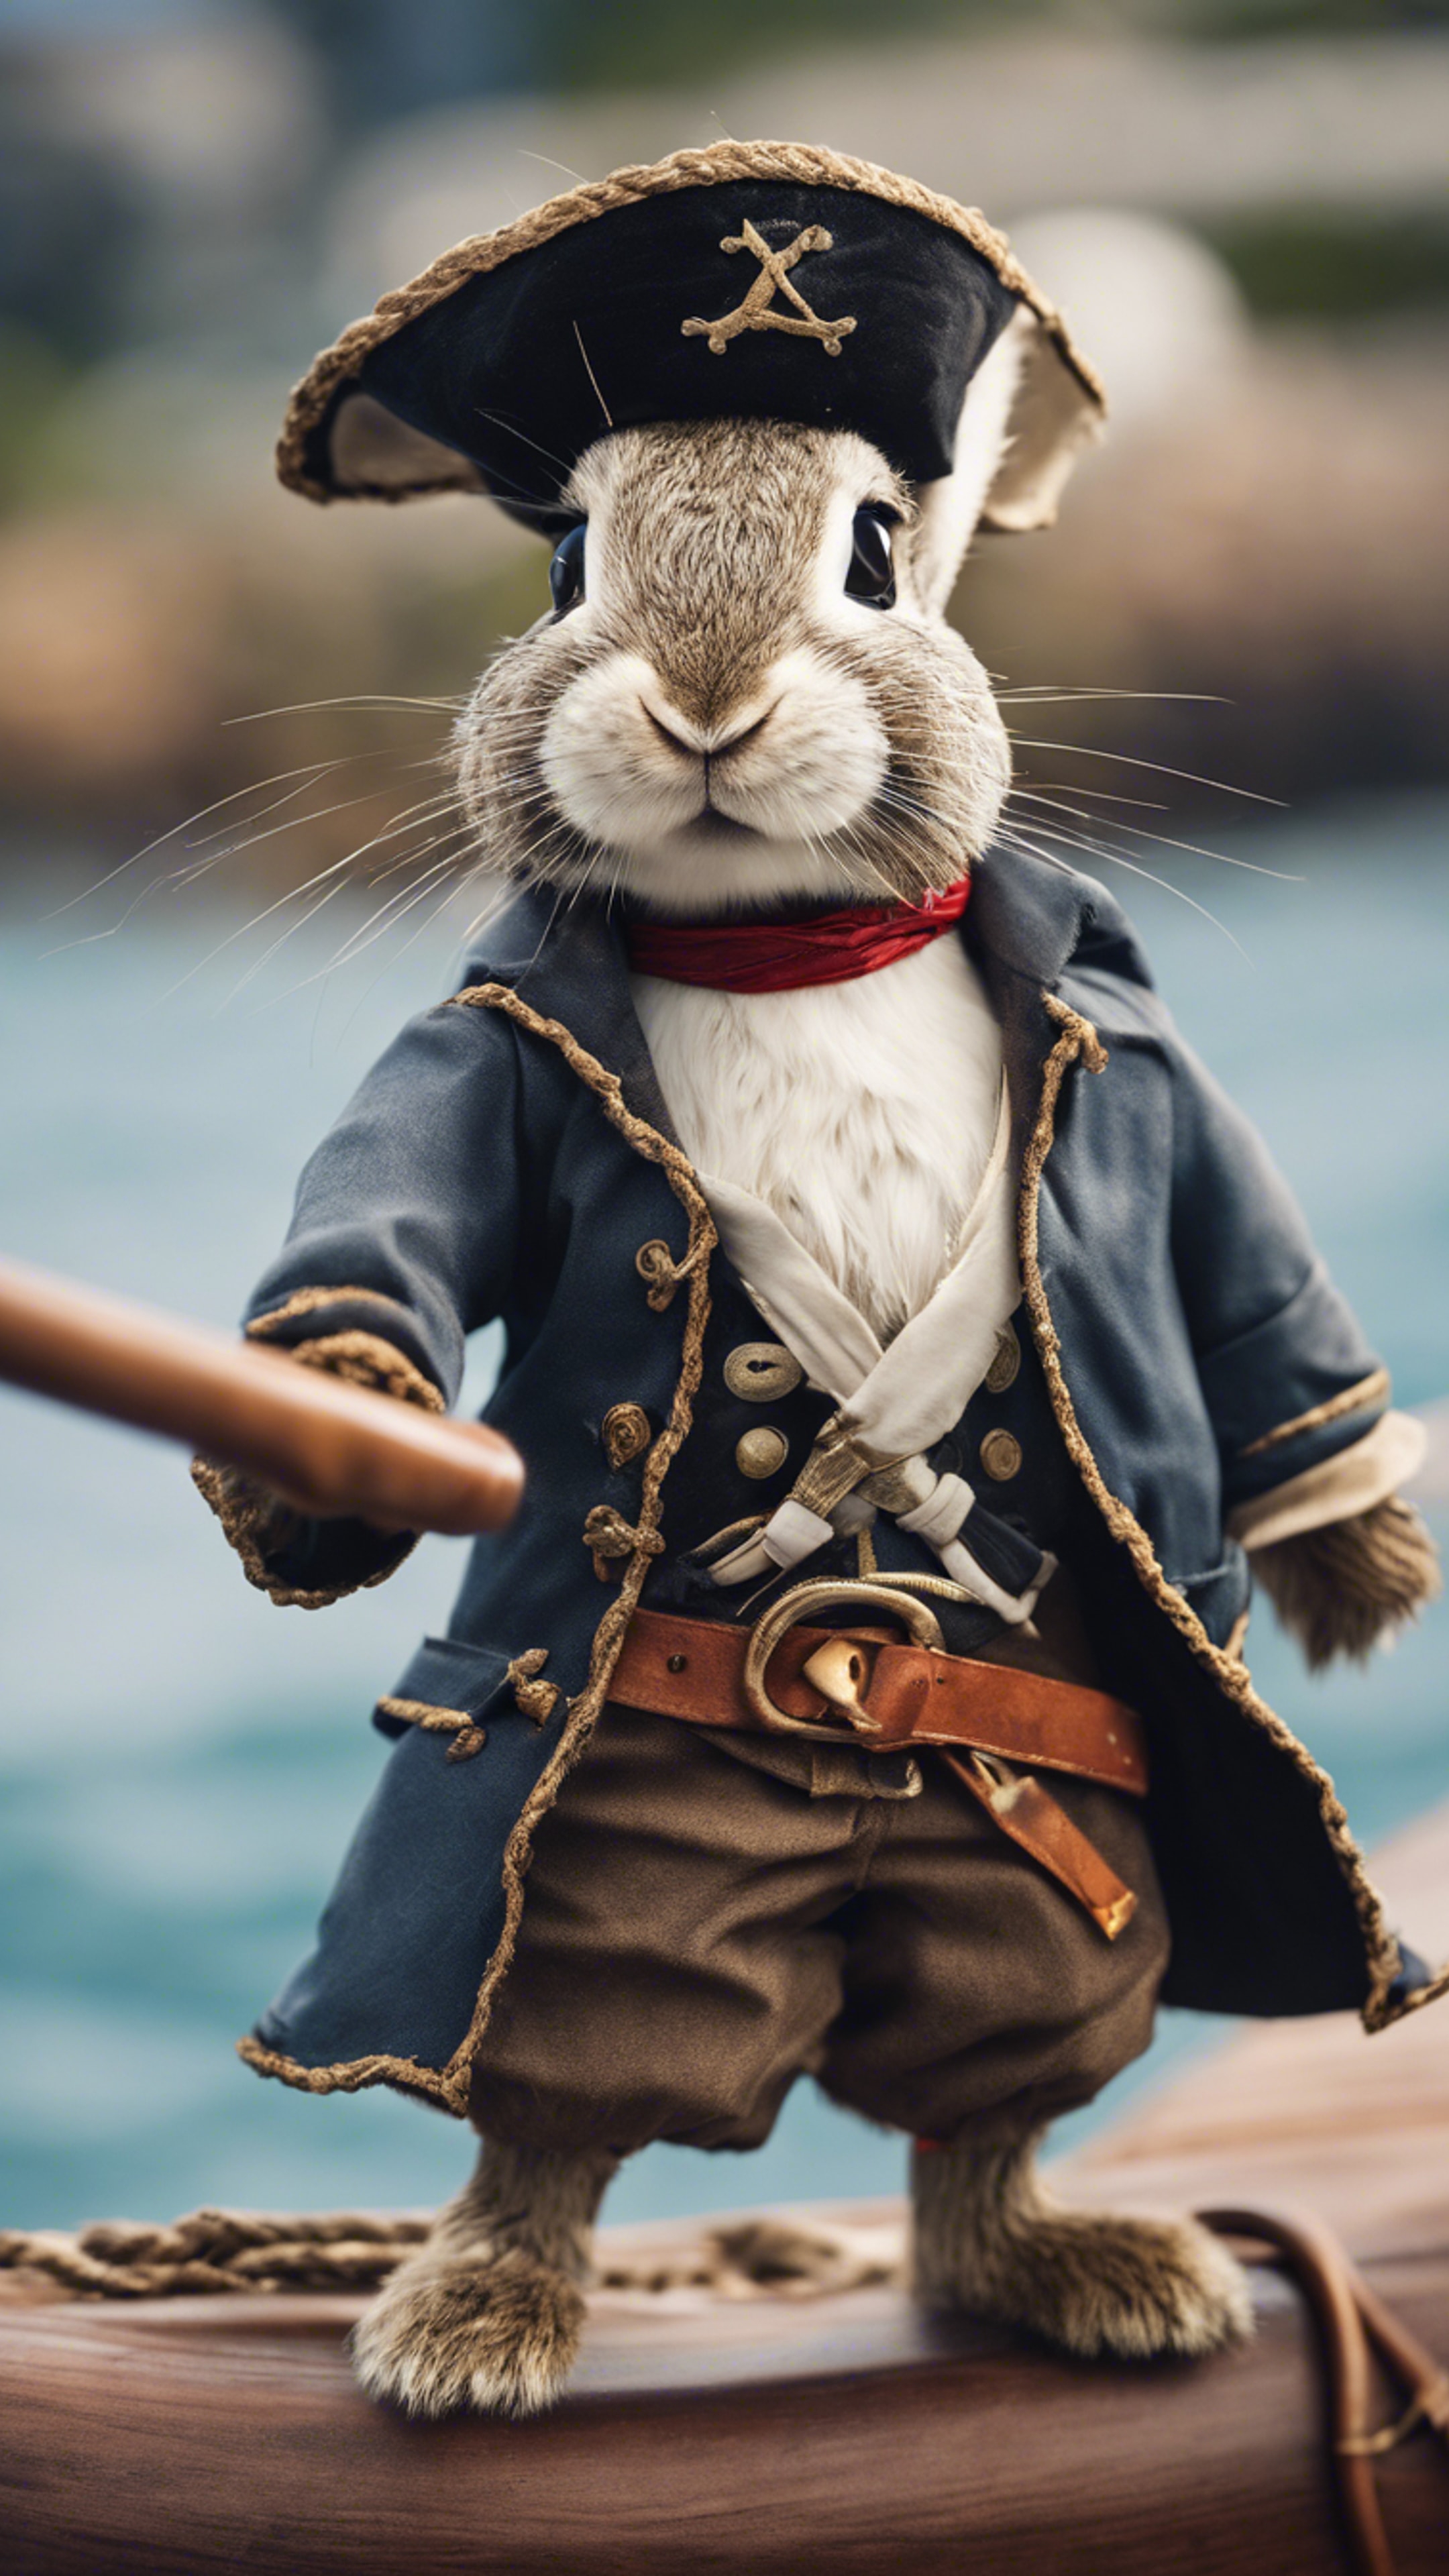 A daring rabbit pirate sailing the high seas.壁紙[1f90c9637d8f4113a4b3]